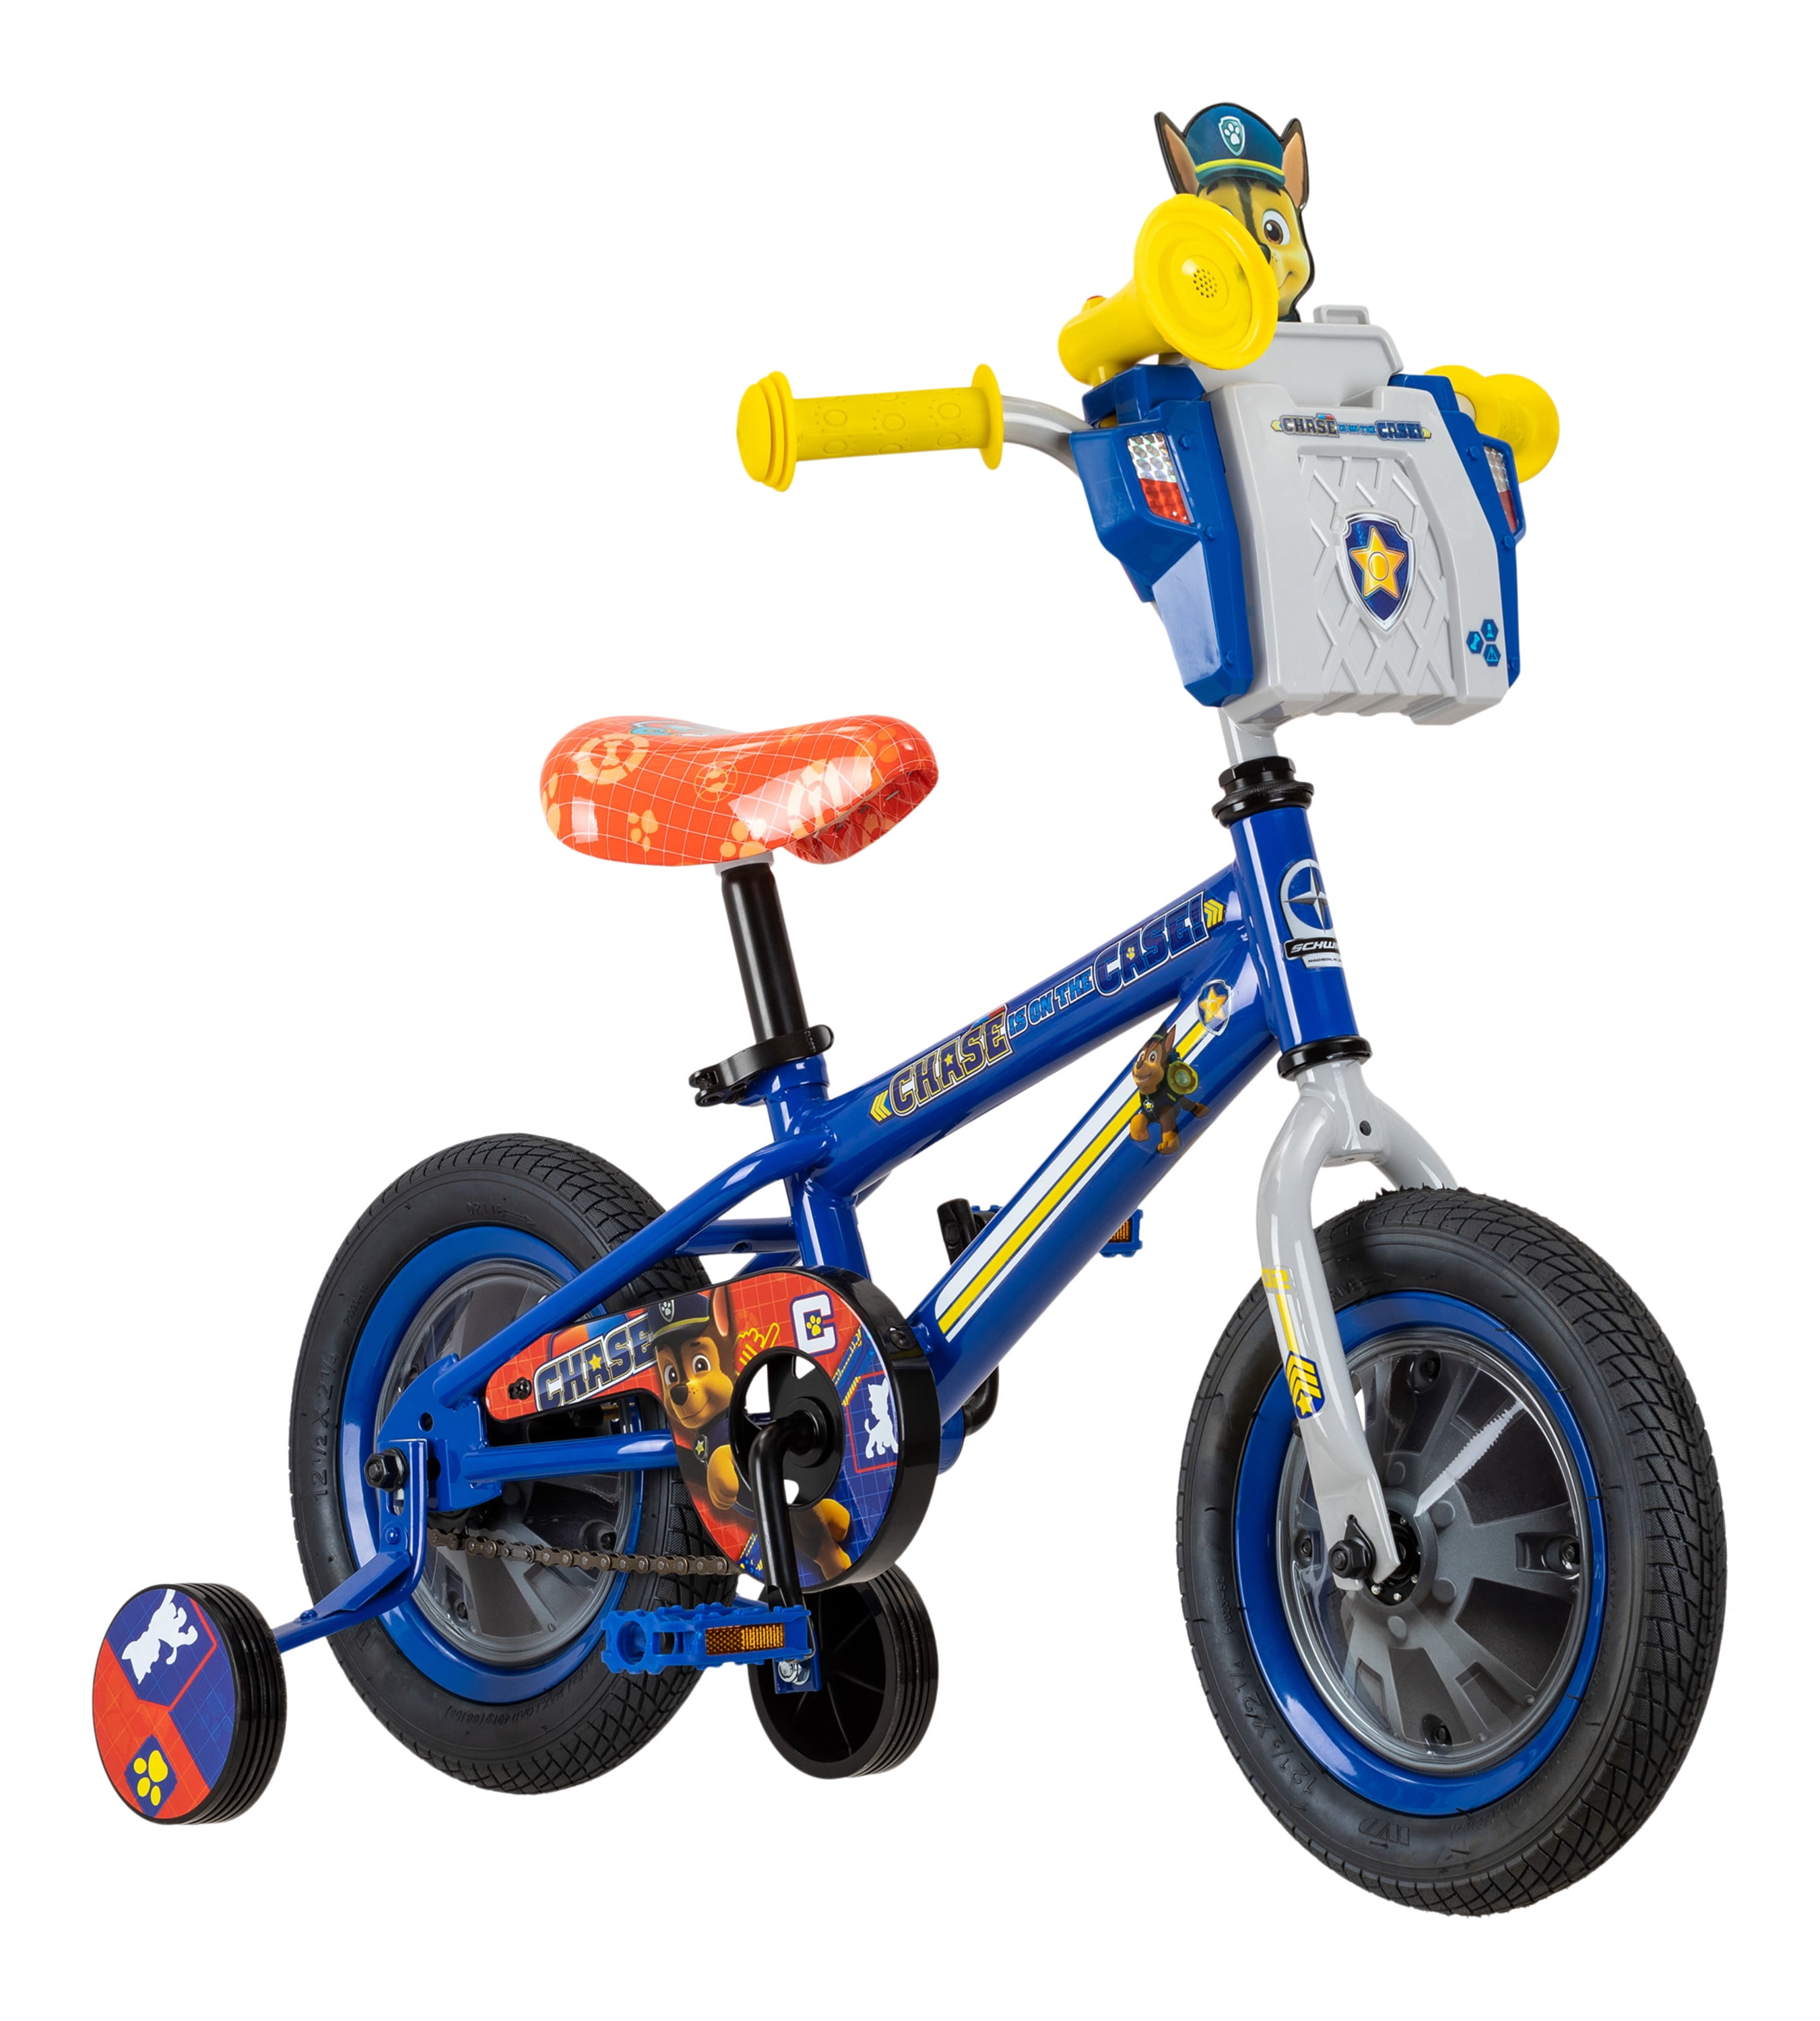 Nickelodeon's PAW Patrol: Chase Bicycle, 12-inch wheels, ages 2 - 4, blue,  preschool kids bike